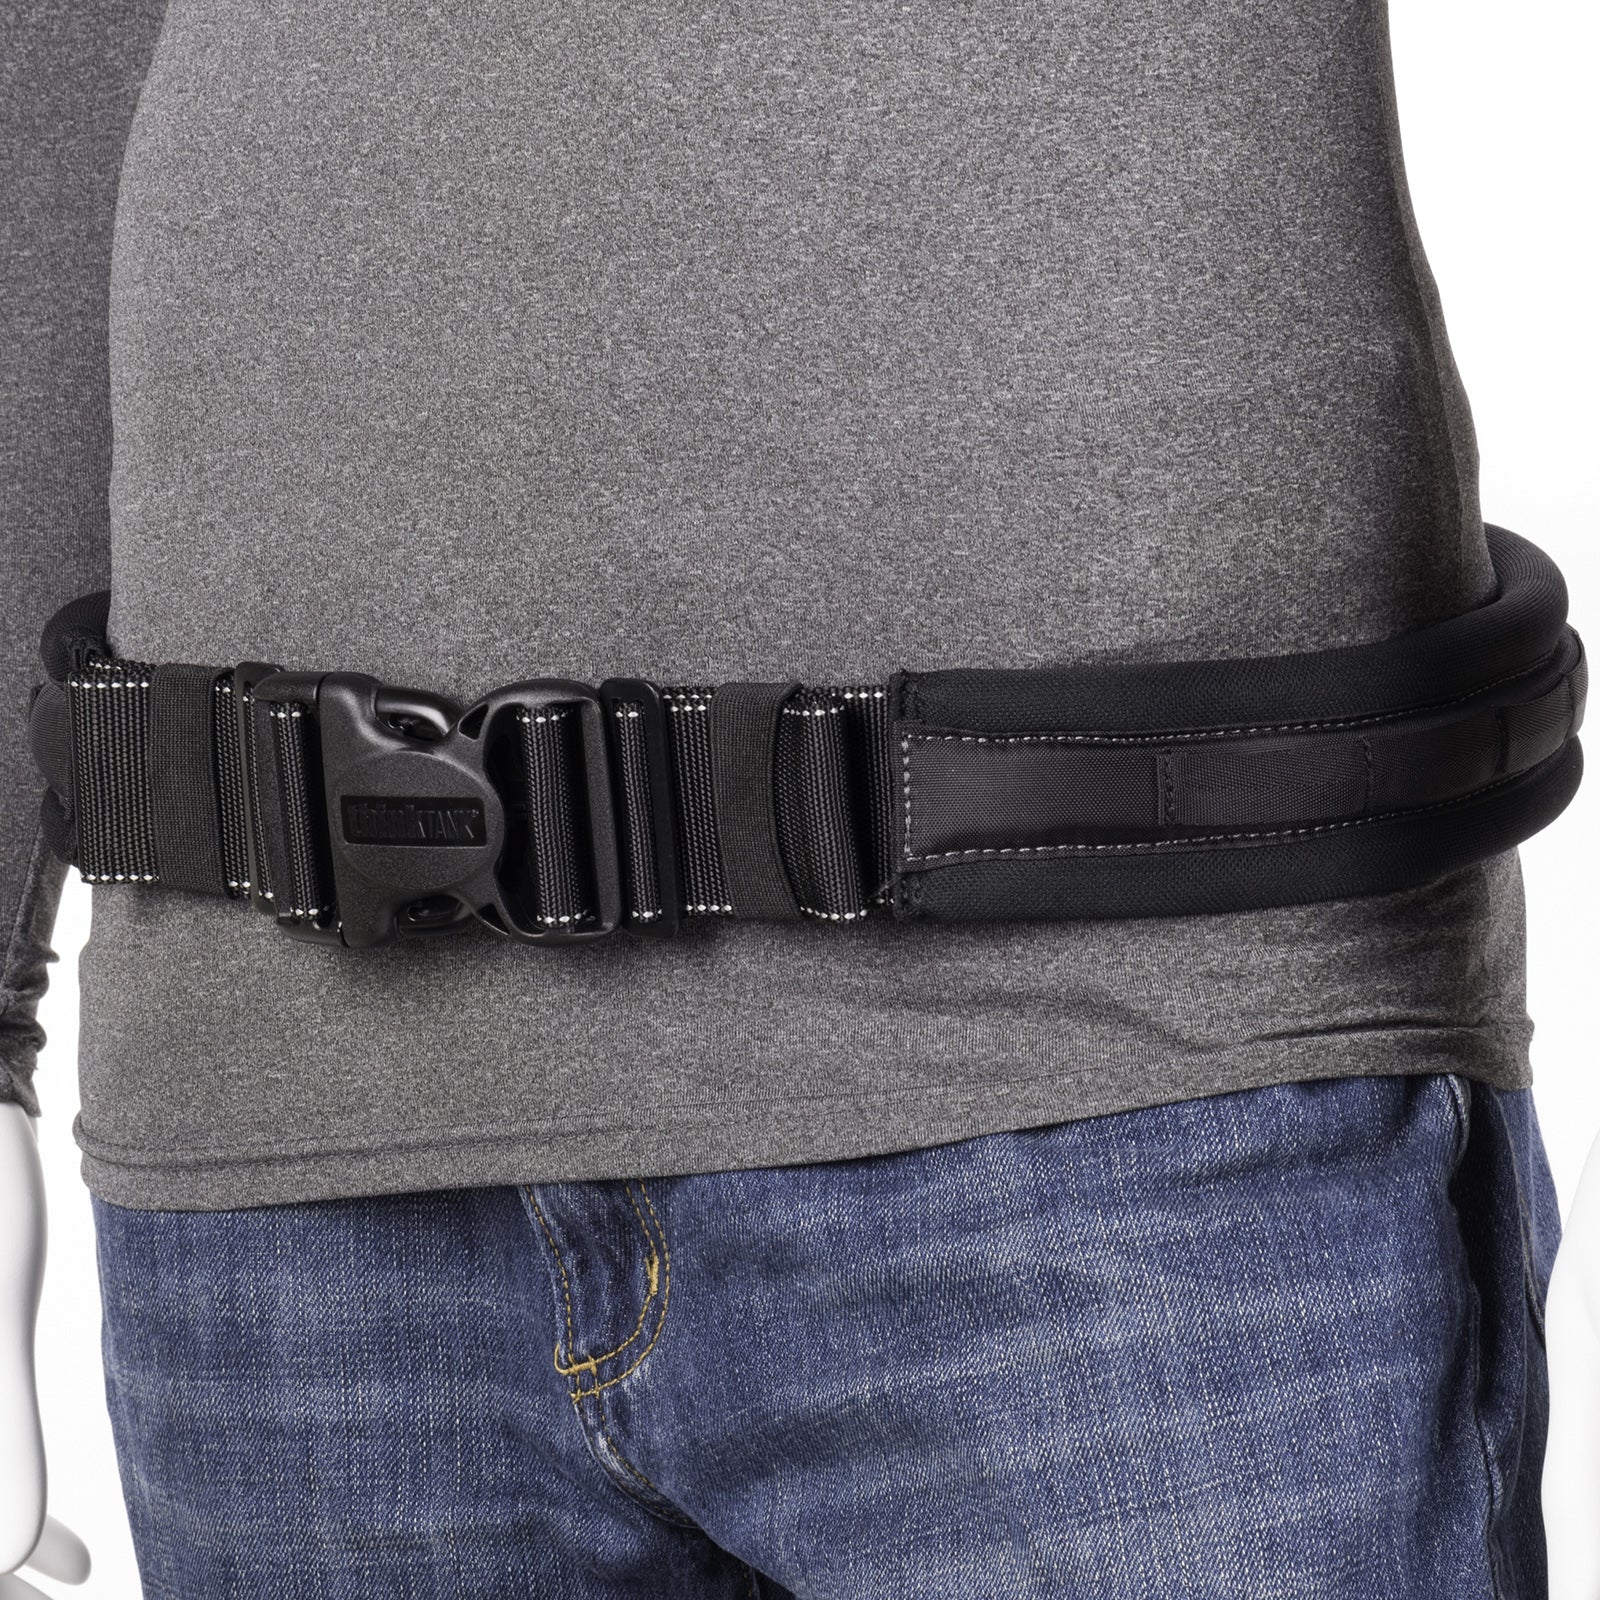 Pro Speed Belt - modular DSLR Camera belt system for professionals – Think  Tank Photo